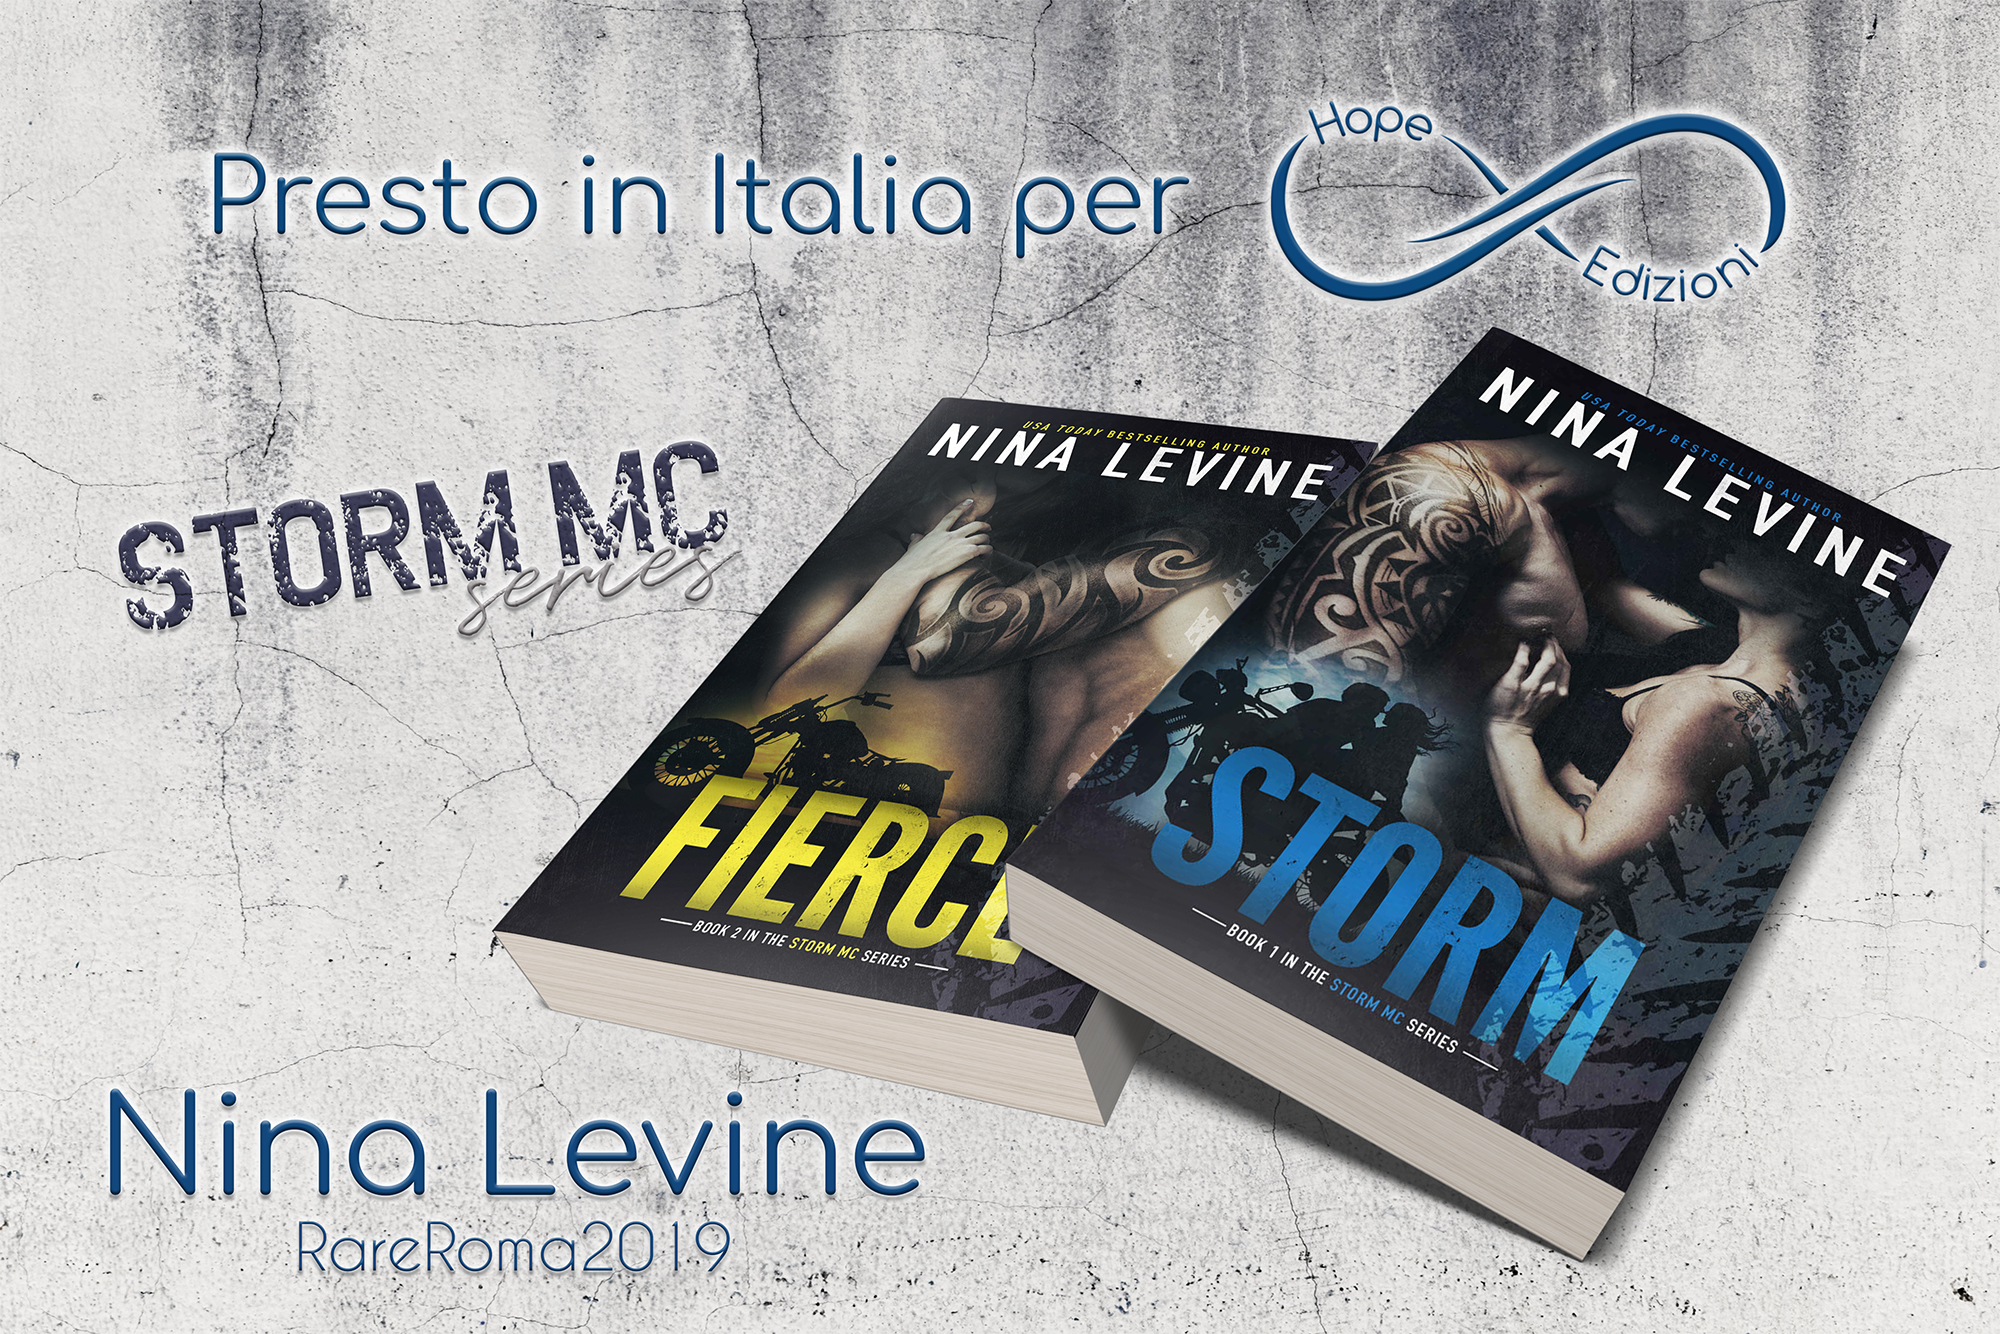 Presto in Italia… Nina Levine!